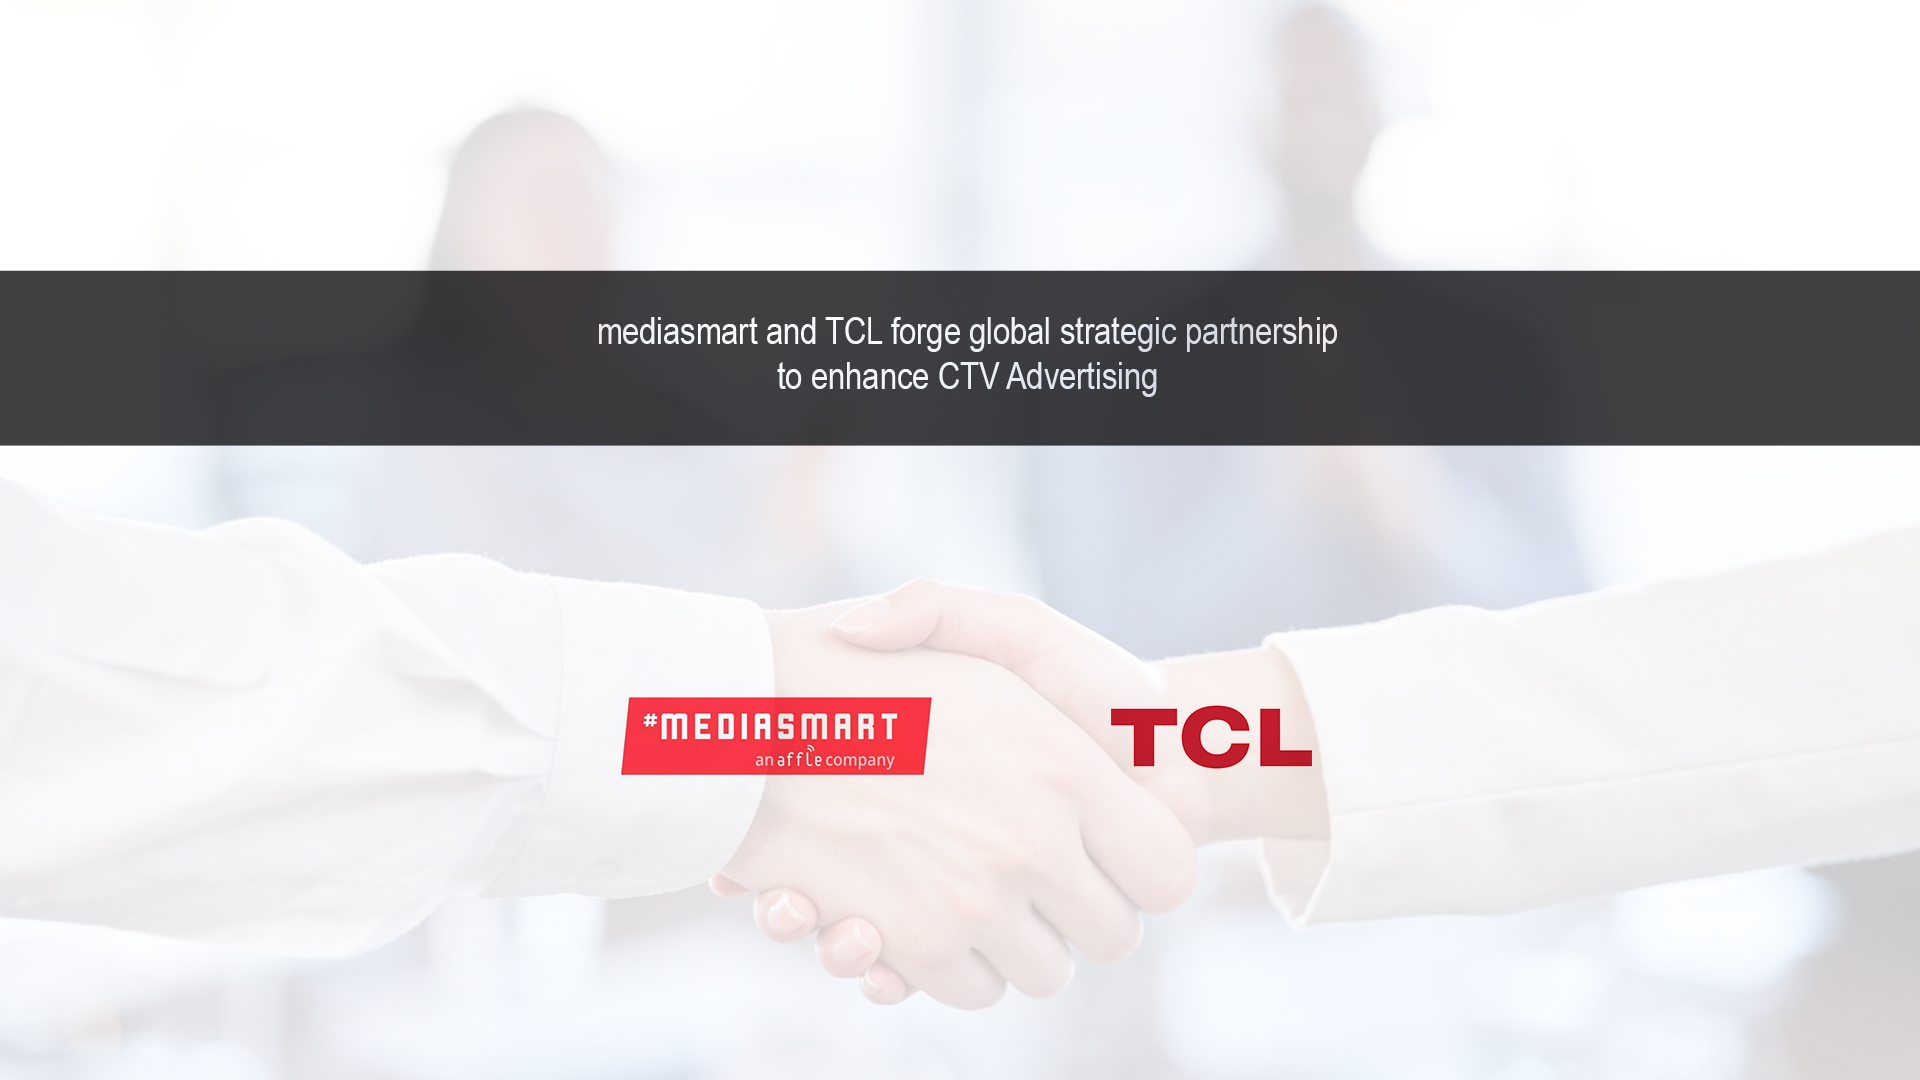 mediasmart and TCL forge global strategic partnership to enhance CTV Advertising